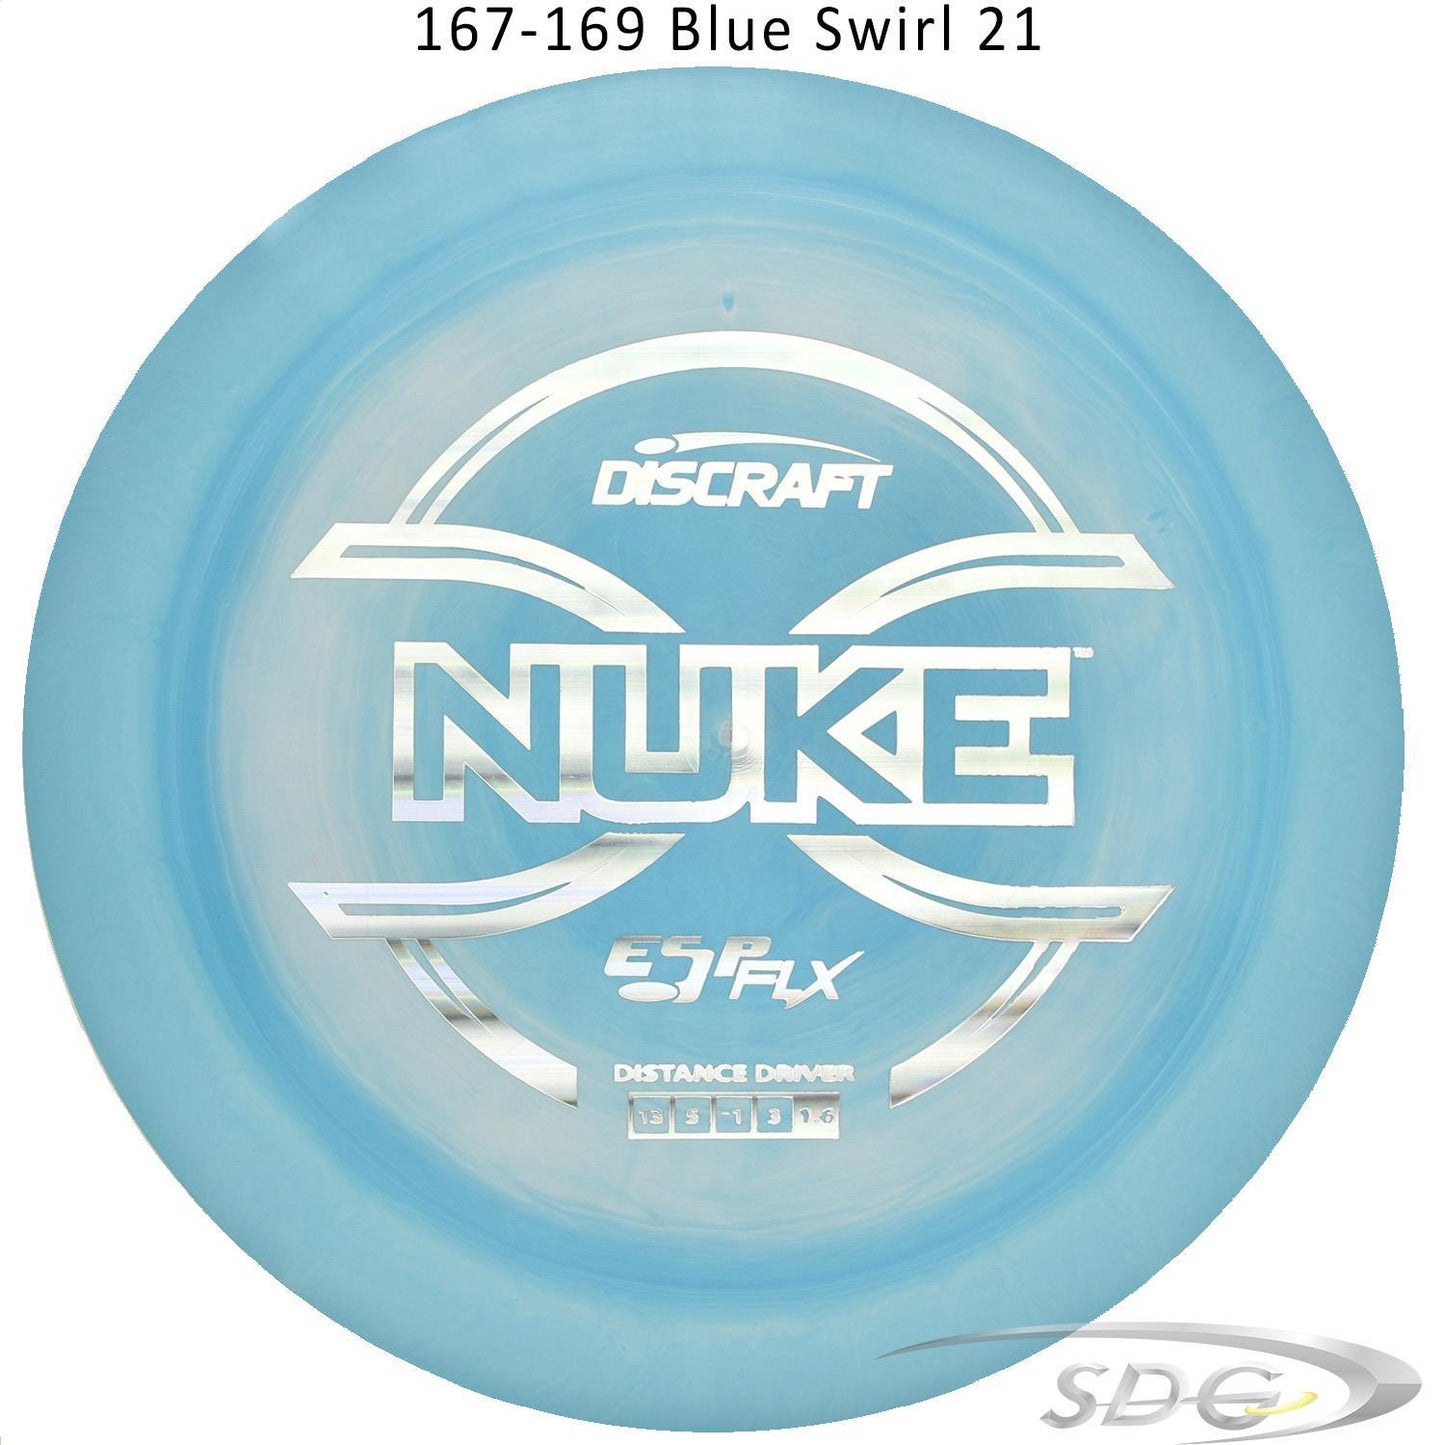 discraft-esp-flx-nuke-disc-golf-distance-driver 167-169 Blue Swirl 21